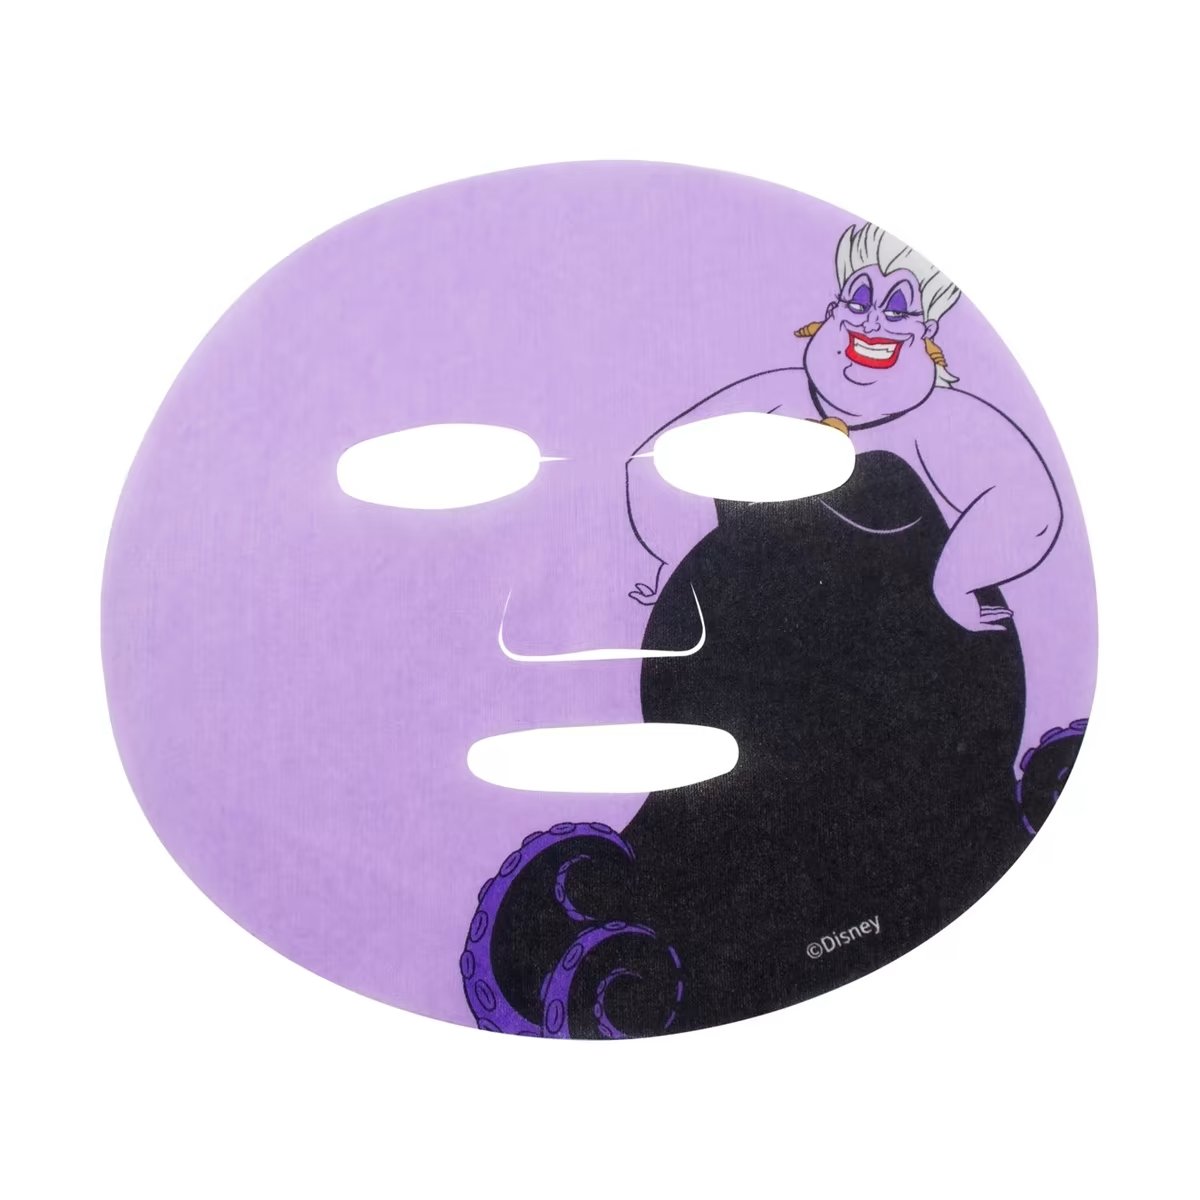 Disney The Little Mermaid Nourishing Sheet Mask 20ml x4 - Sweet Peach Scent Exp:2026 - CC Outlet HK